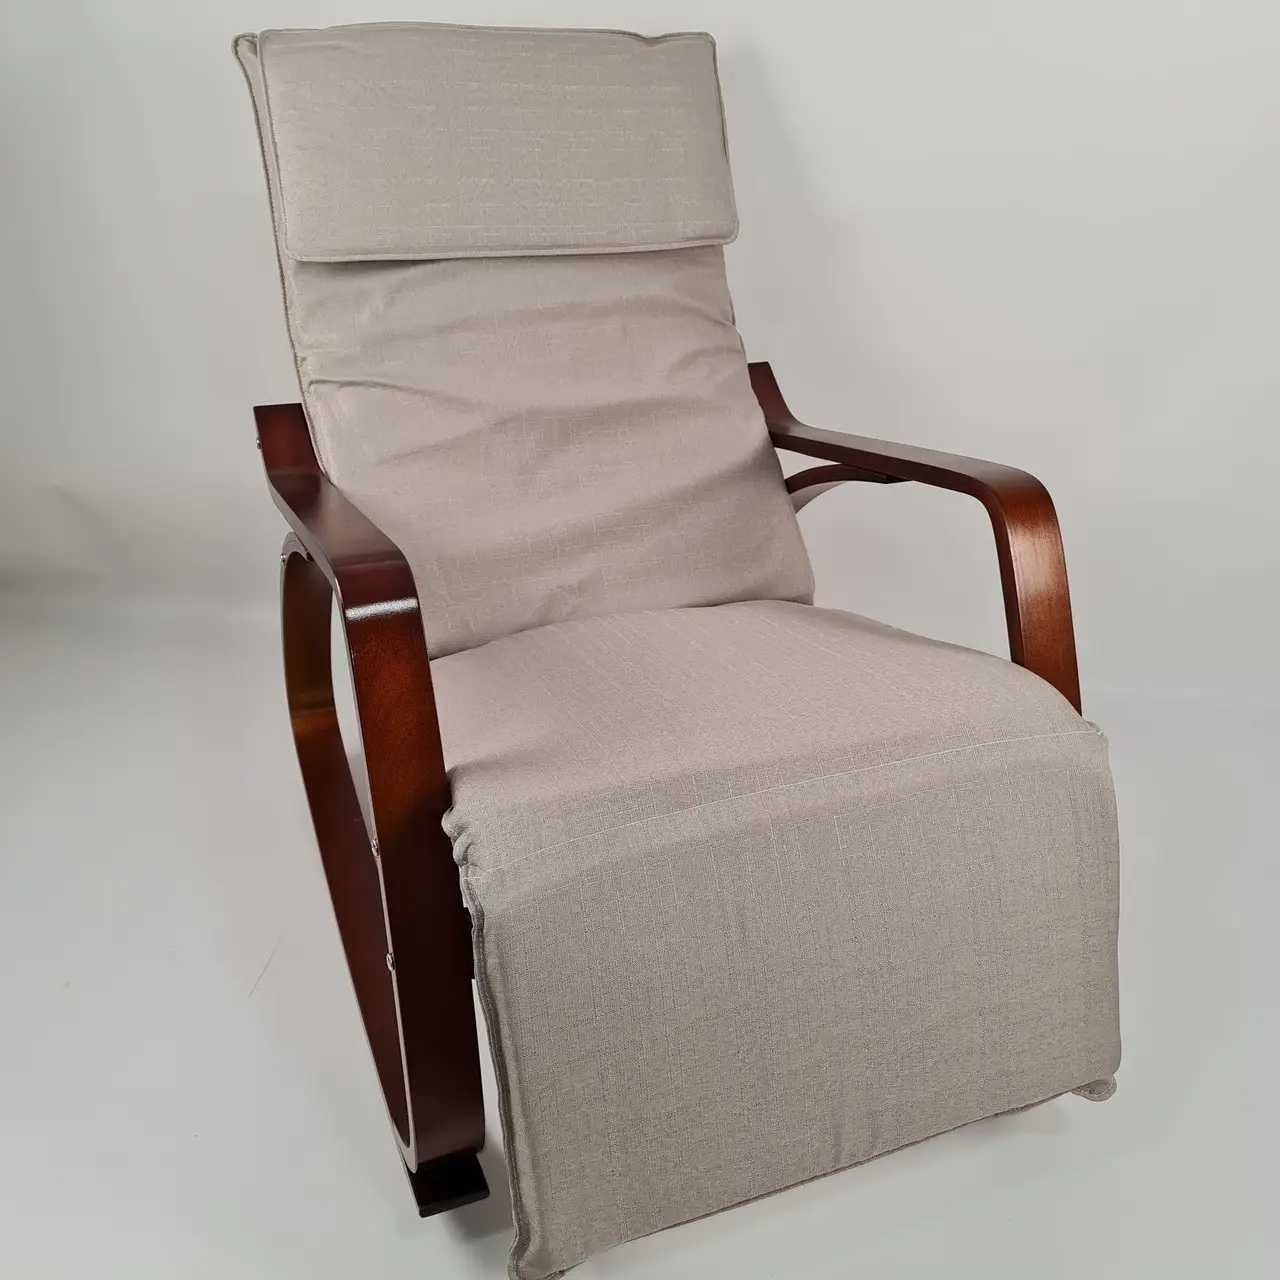 Крісло гойдалка для квартири, кресло качалка Style RC003 Walnut Beige